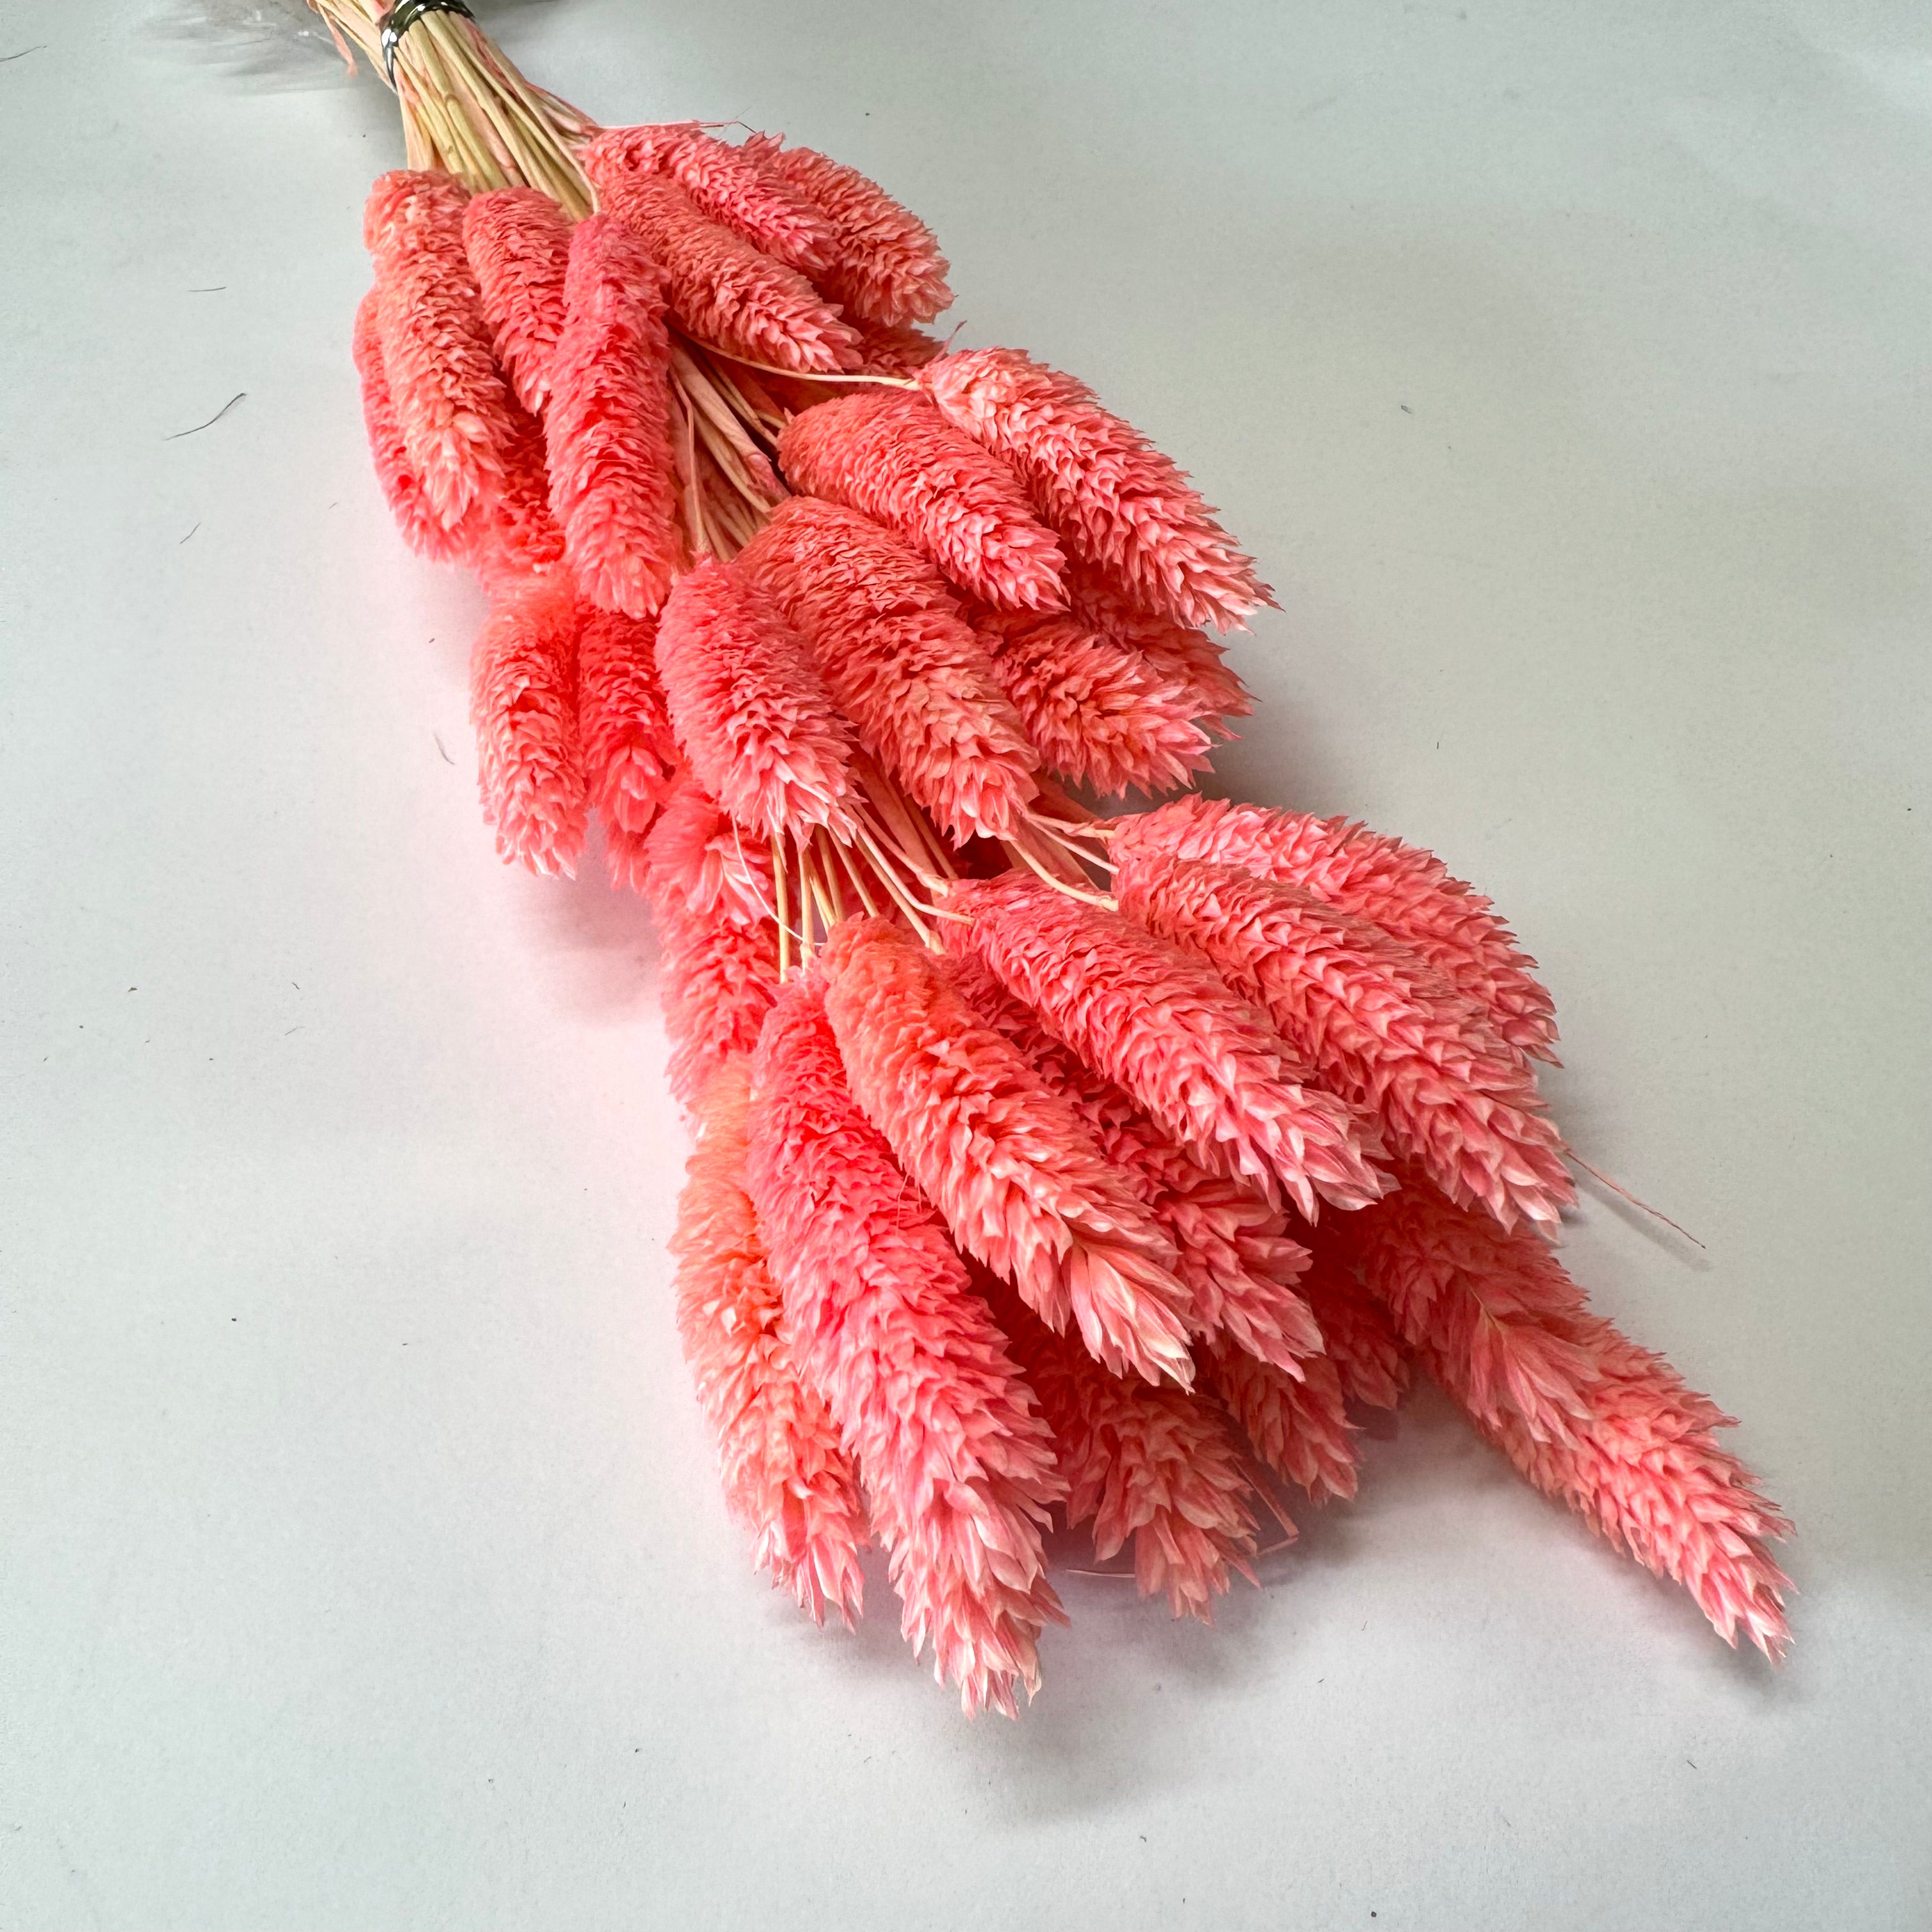 Natural Dried Phalaris Grass Flower Stem Bunch - Vibrant Pink